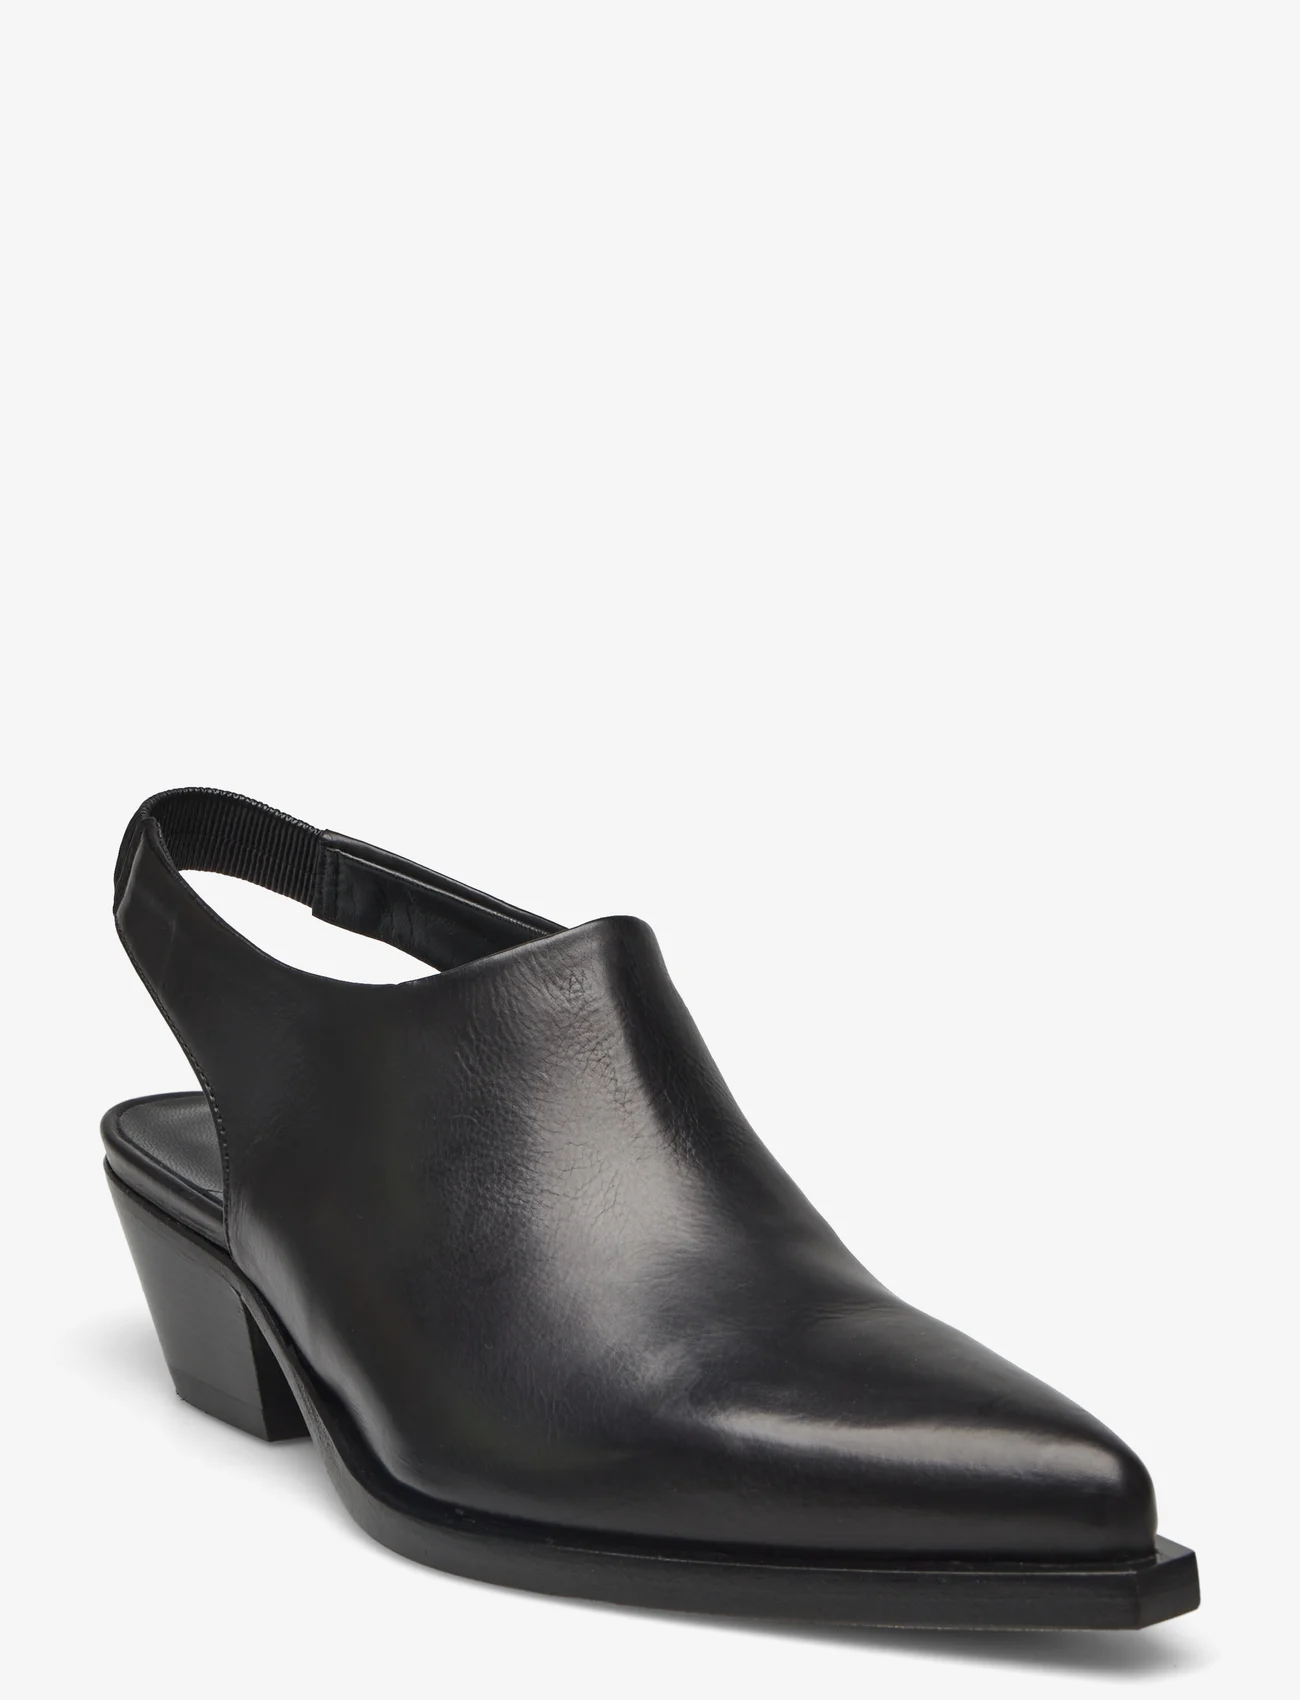 Laura Bellariva - shoes - cowboyboots - black - 0